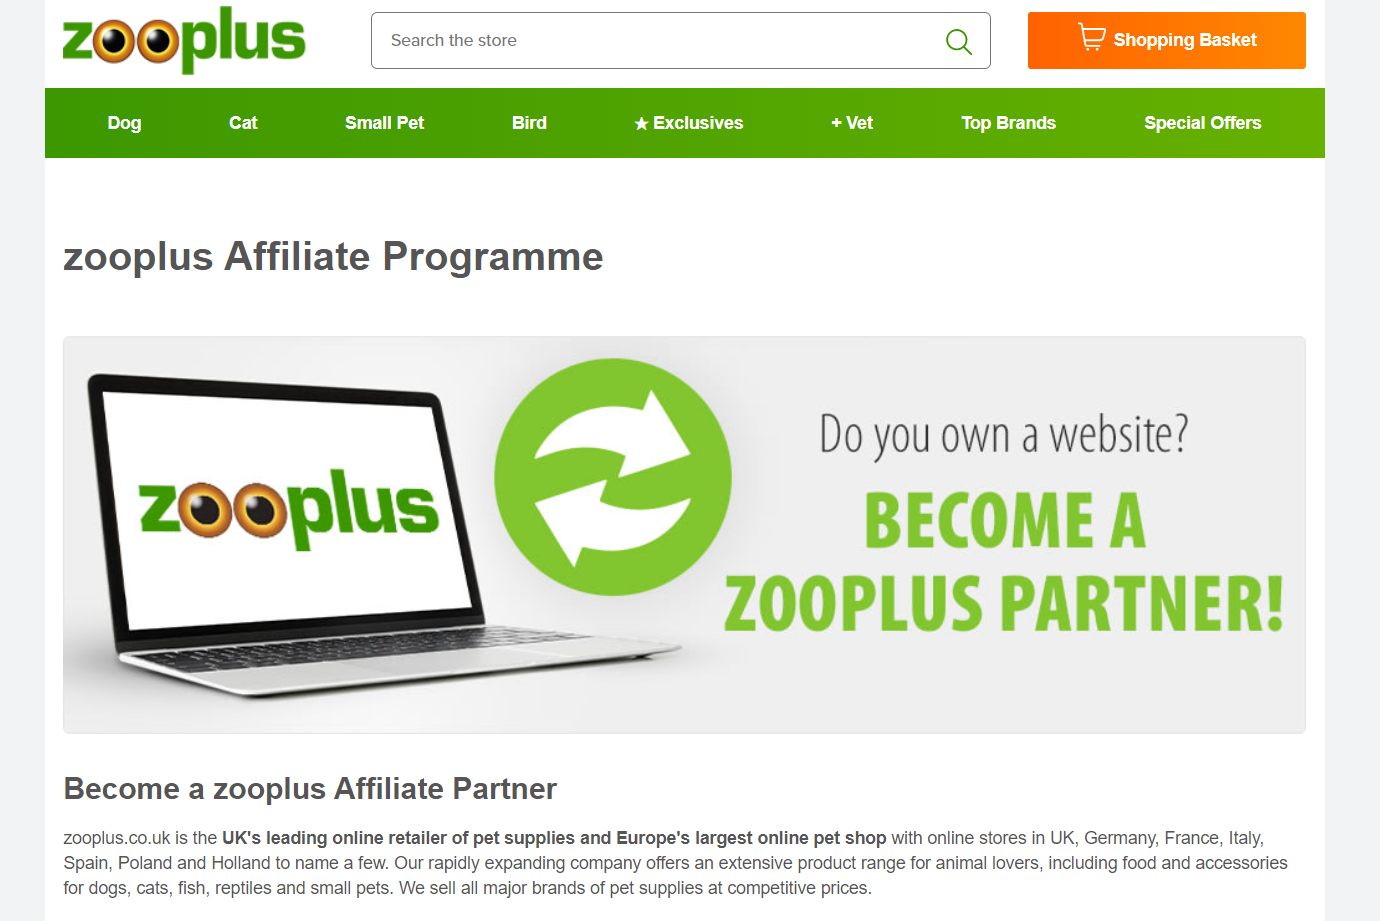 Zooplus affiliate program